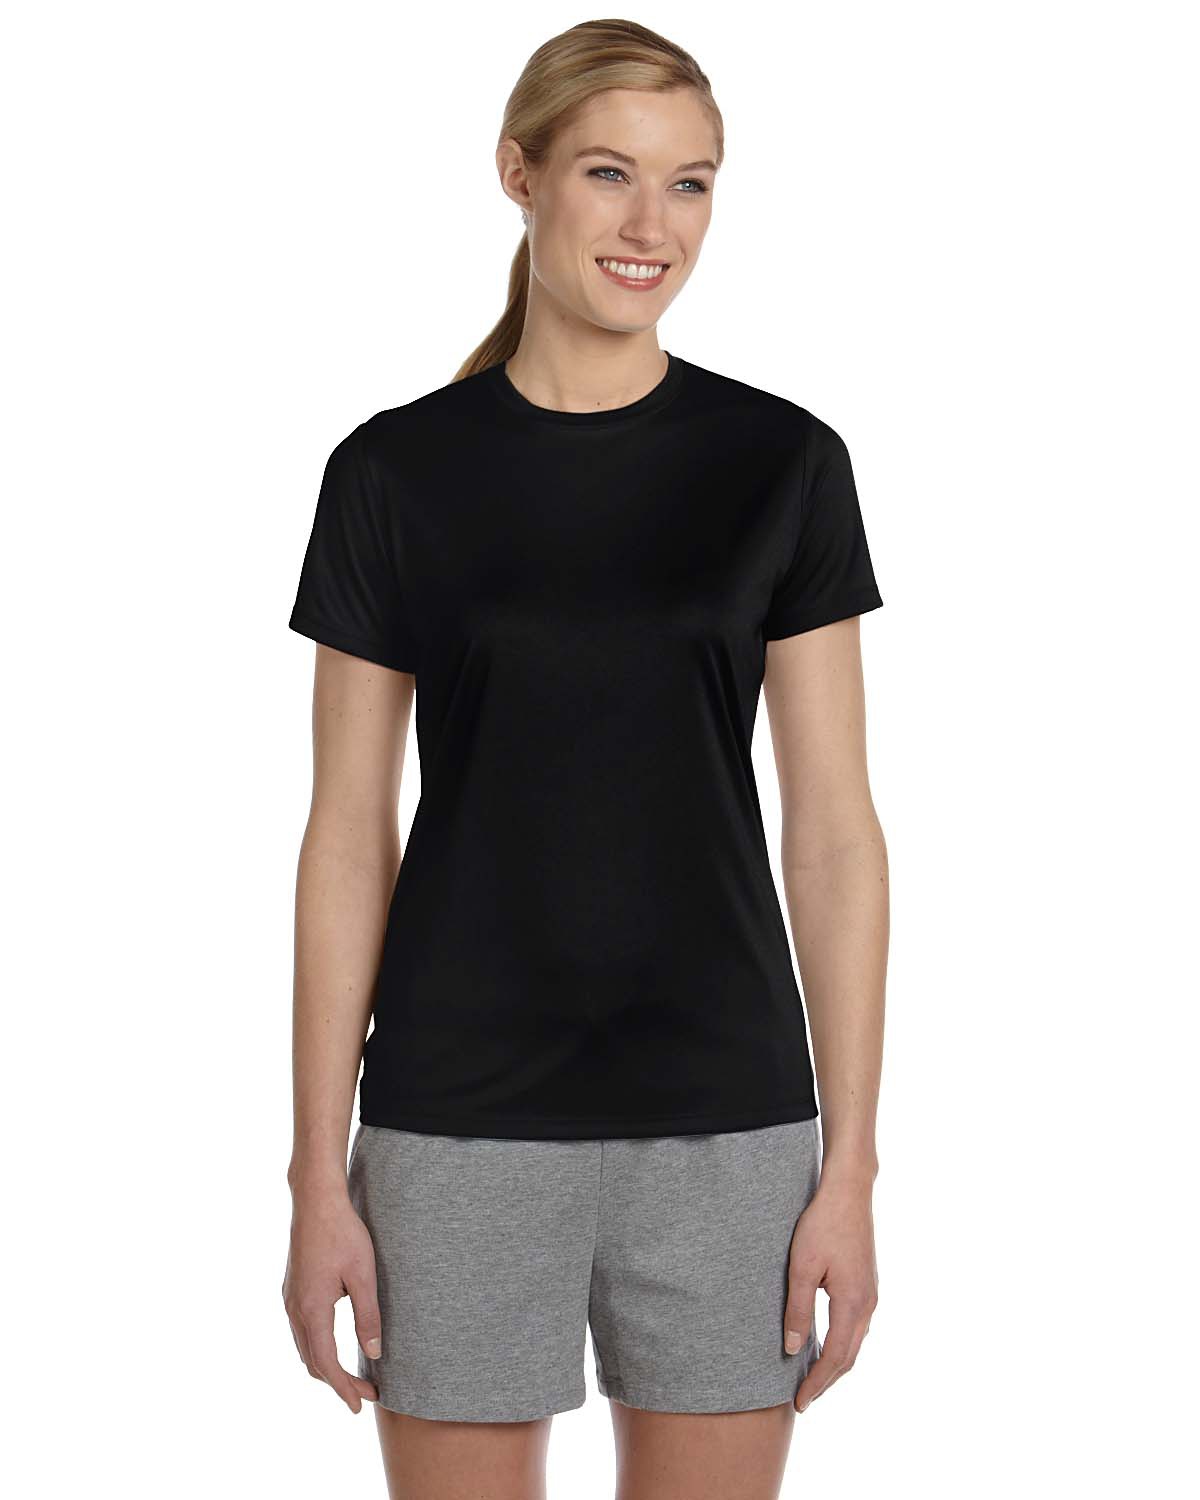 'Hanes 4830 Cool Dri Women's Performance Short Sleeve T-Shirt'